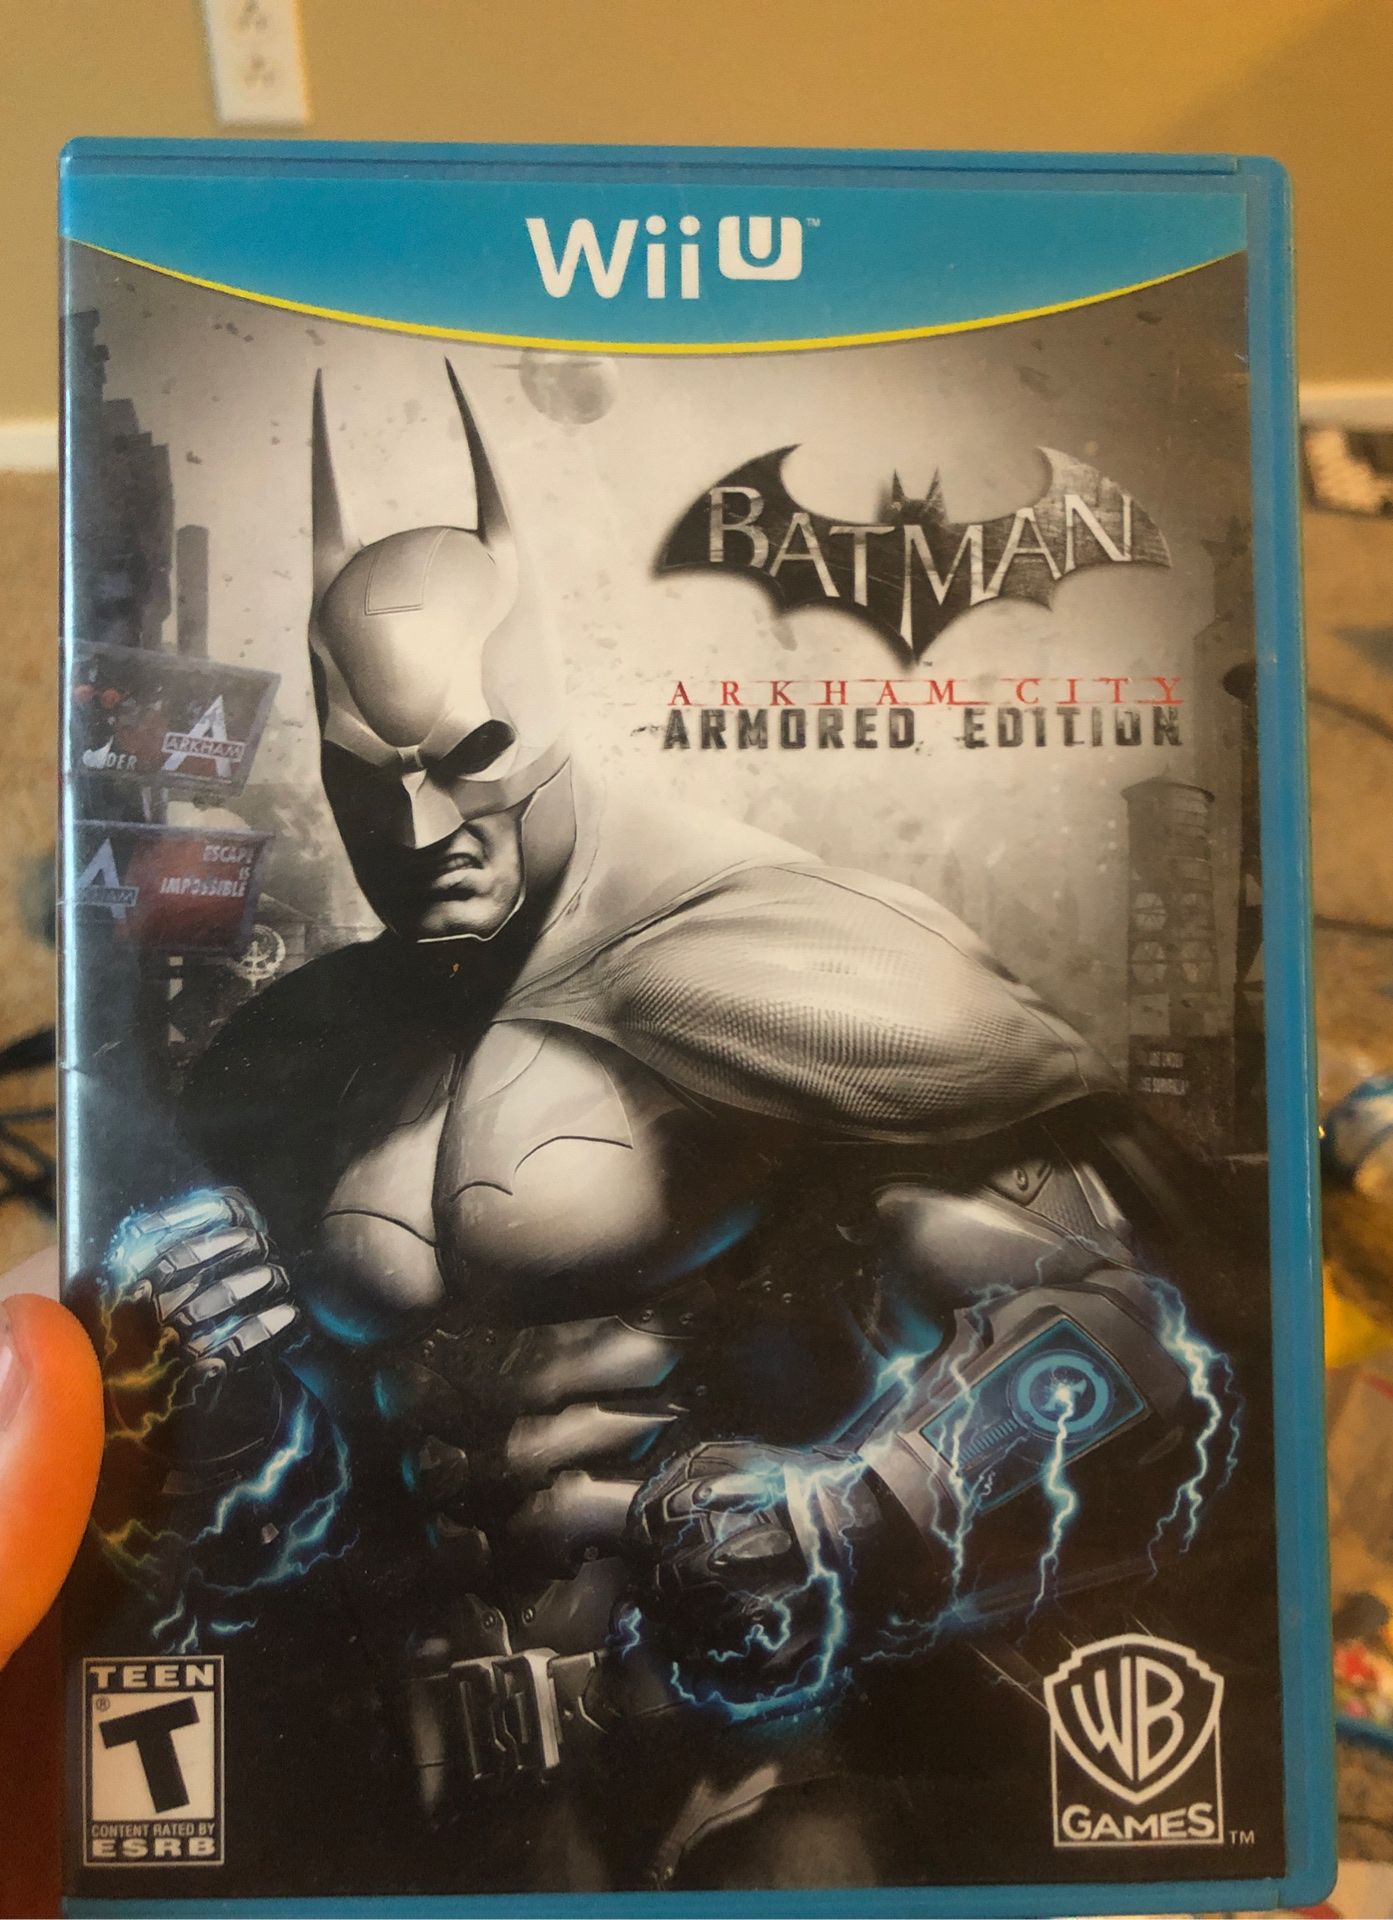 Batman Arkham City Armored Edition Wii U $15 Nintendo